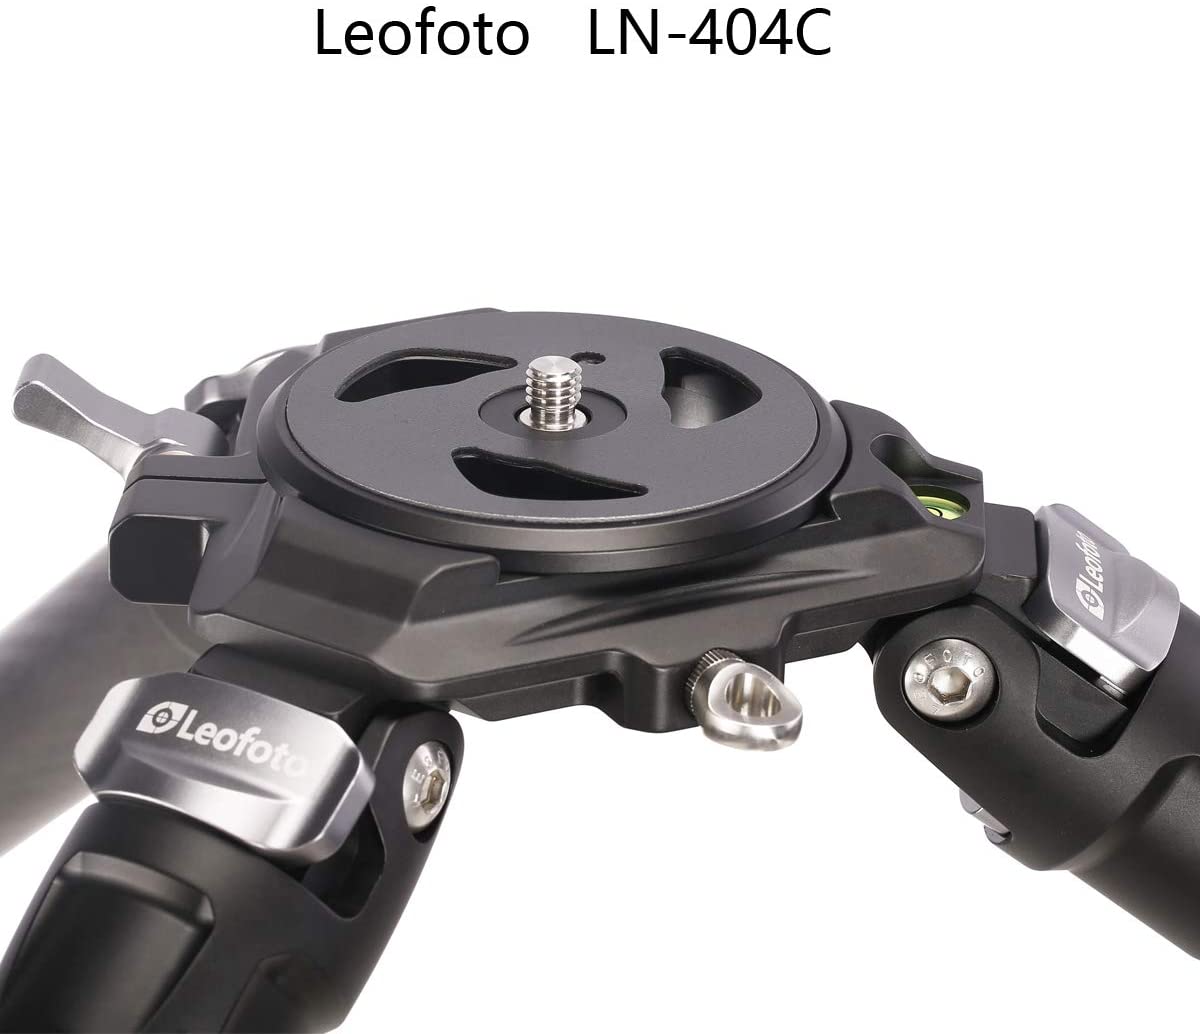 "Open Box" Leofoto TP-100 / TP-75 3/8" Flat Top Plate Adapter